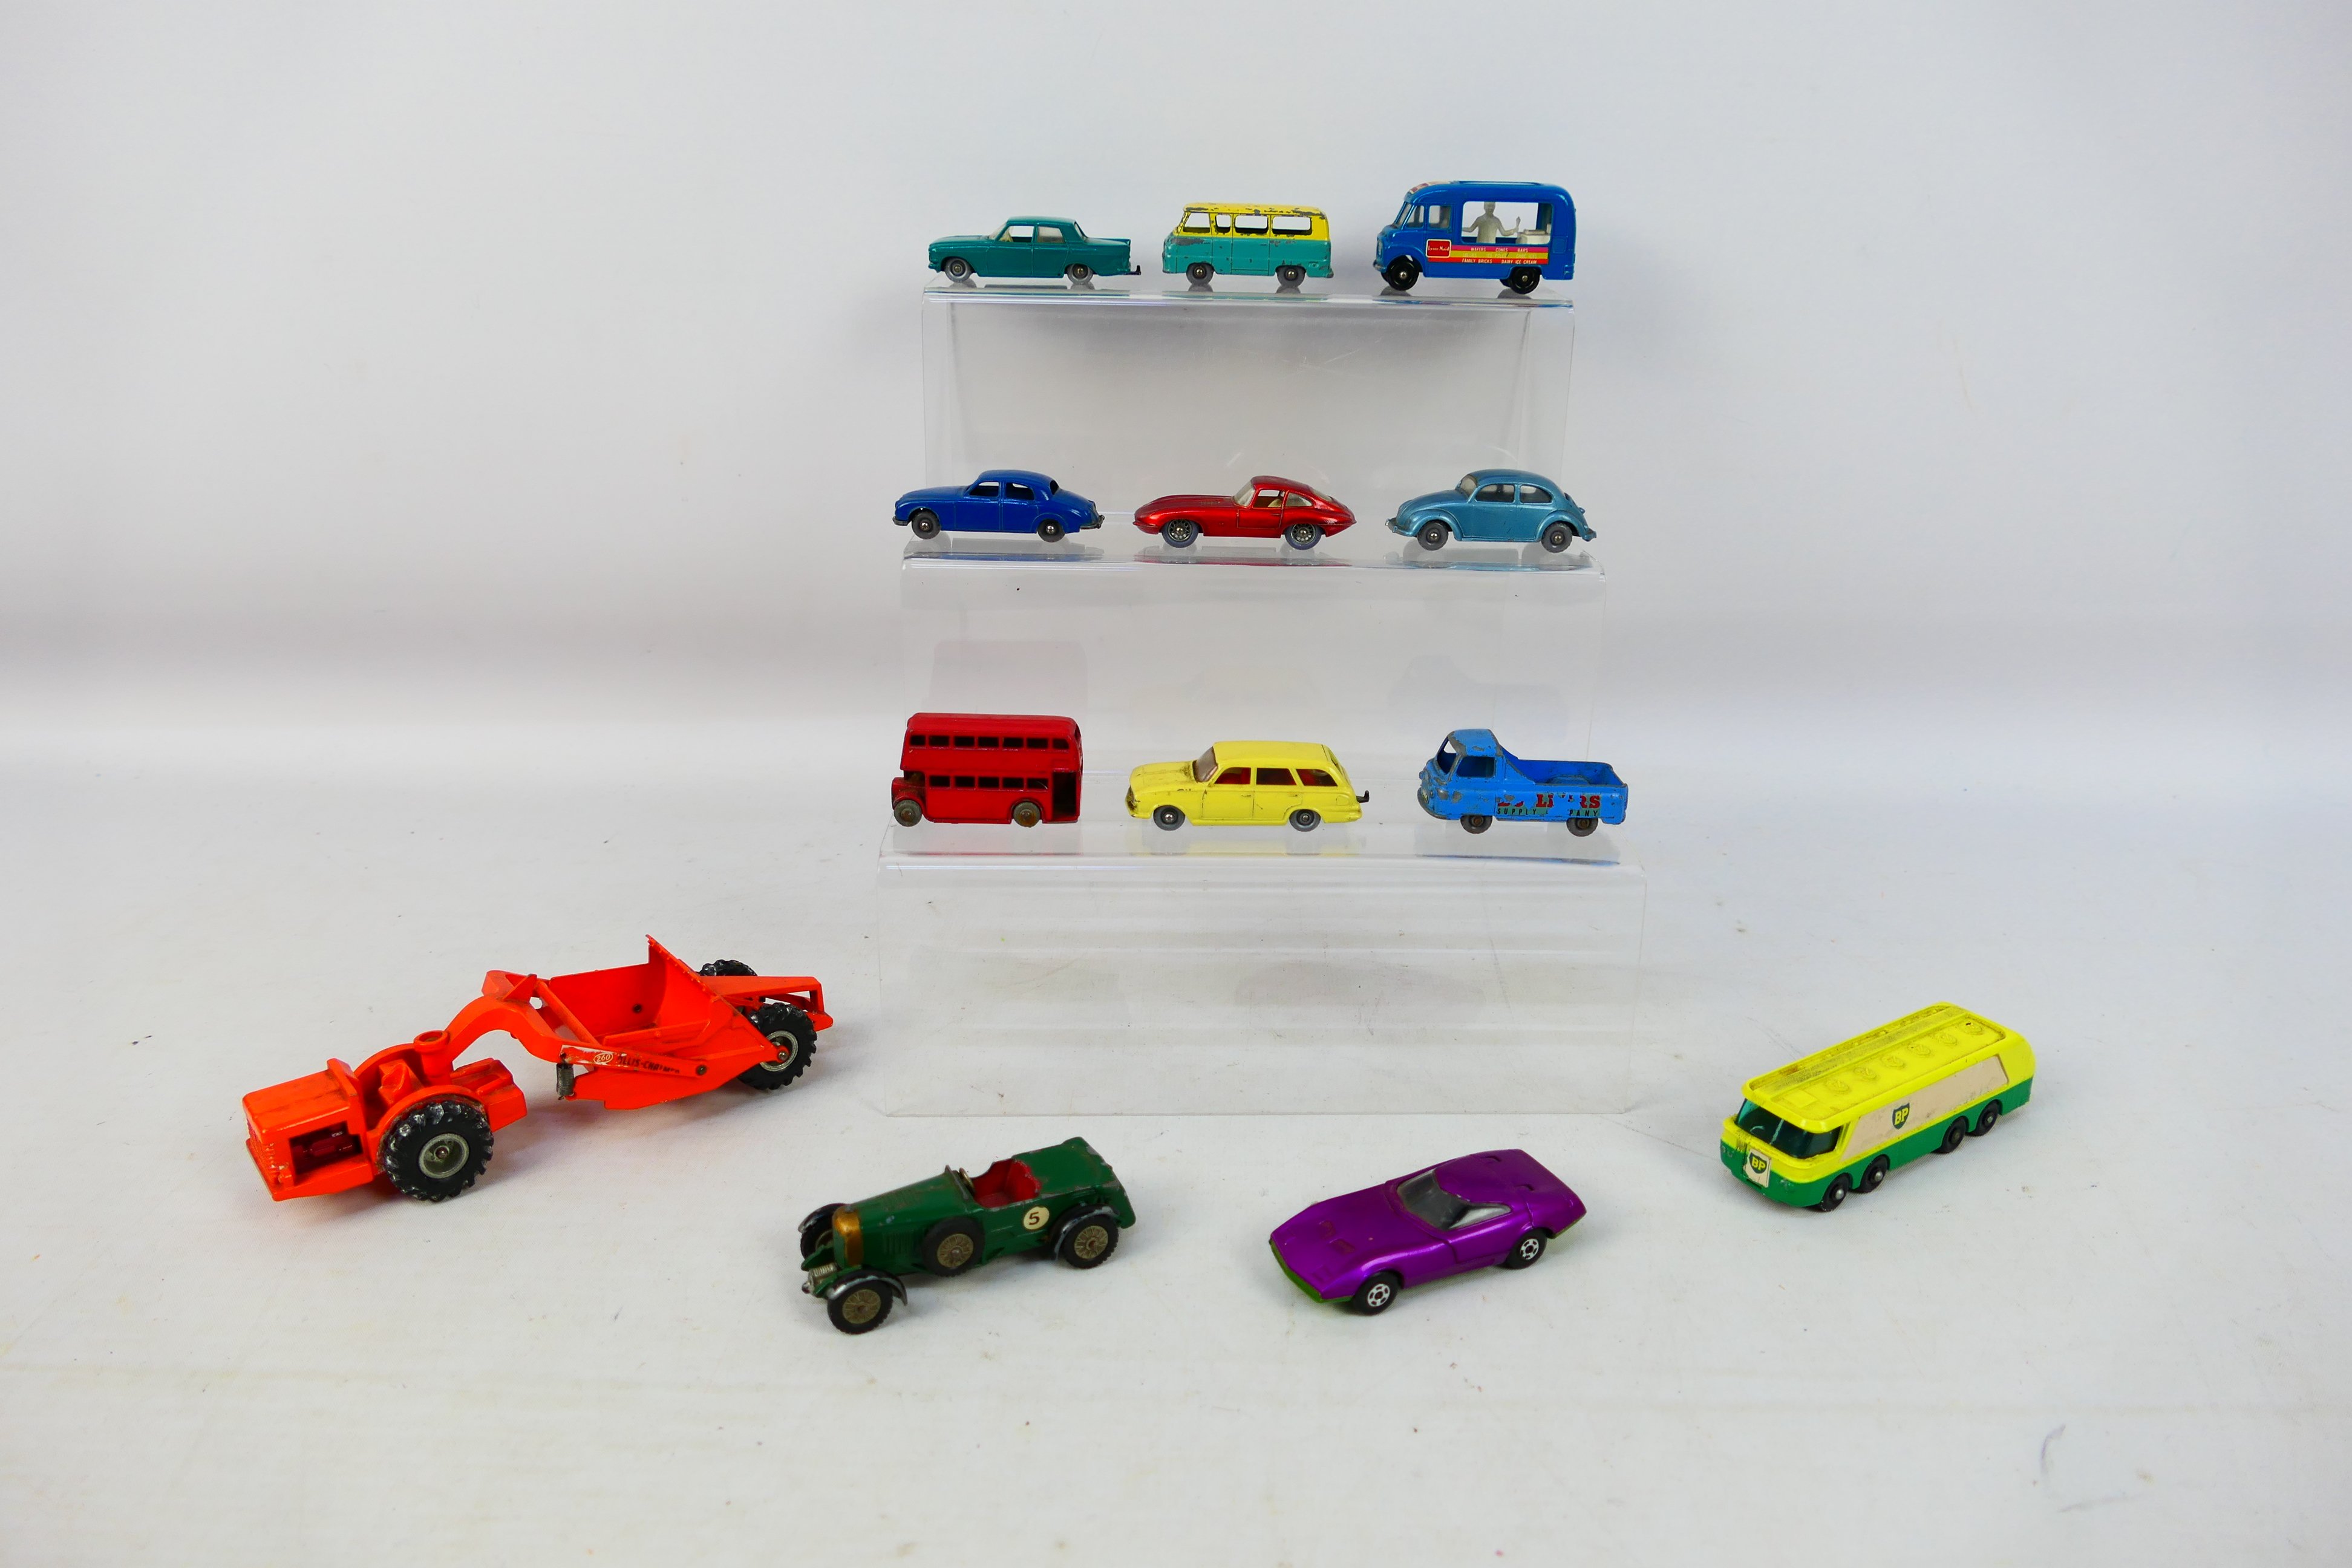 Matchbox - An unboxed collection of Matchbox diecast model vehicles mainly Regular Wheels.